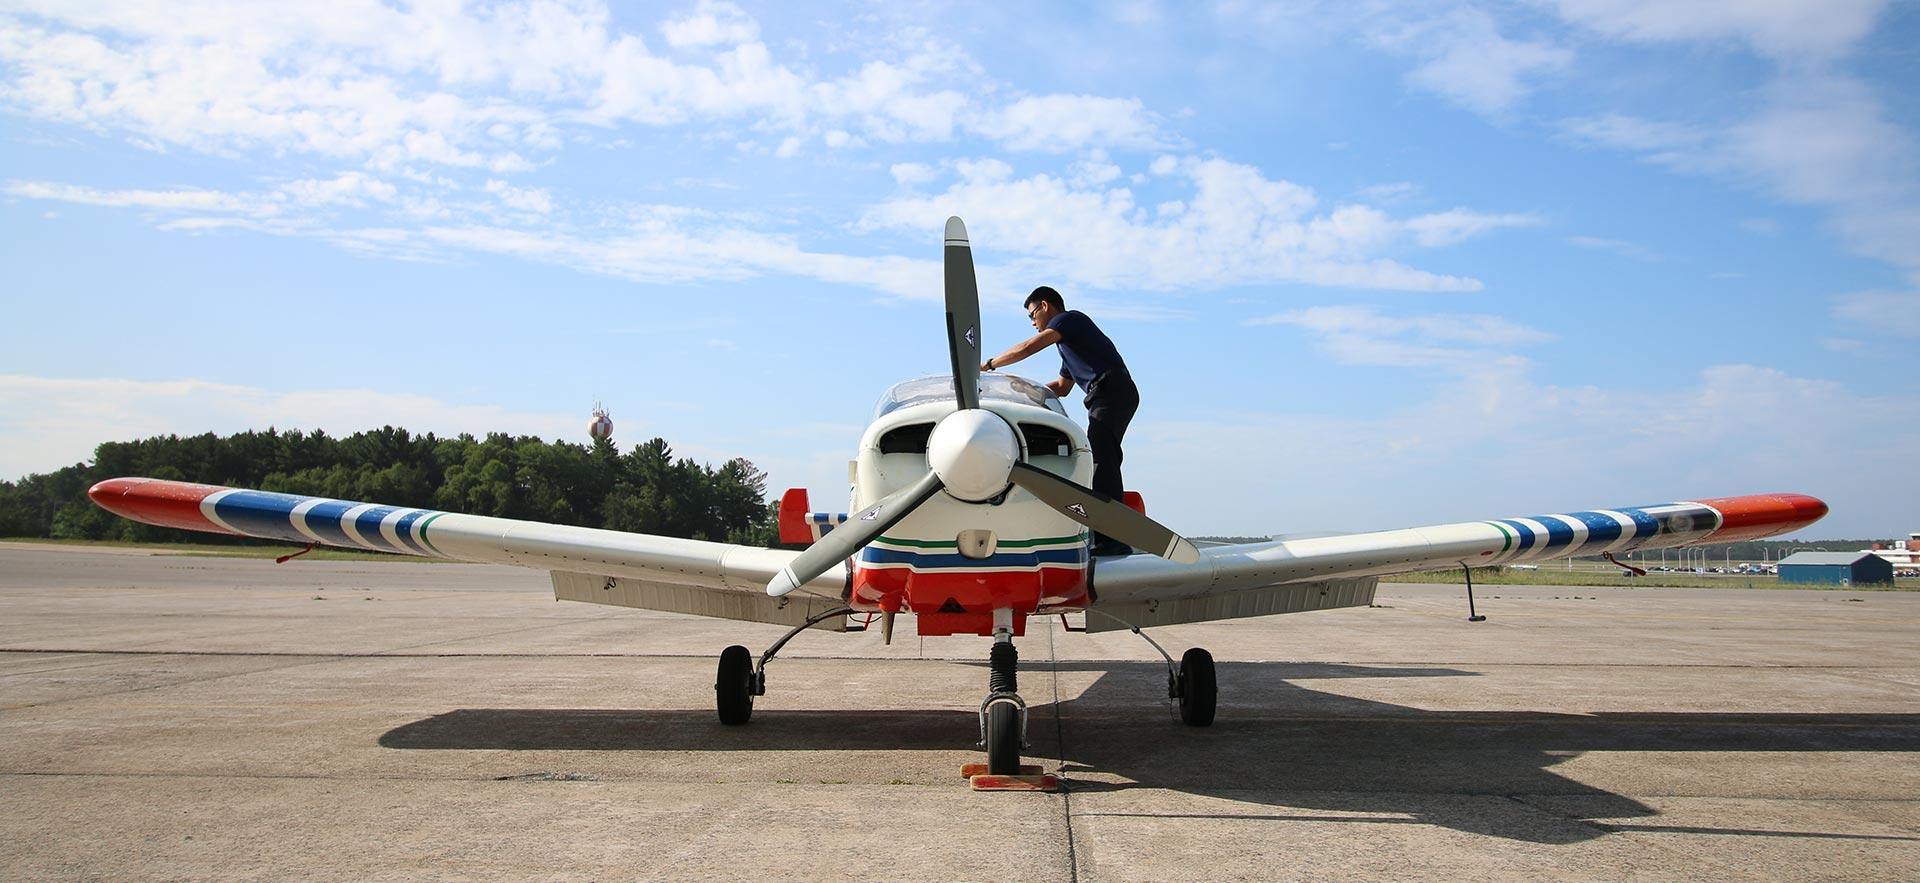 Student preparing о aircraft on runway for flight 